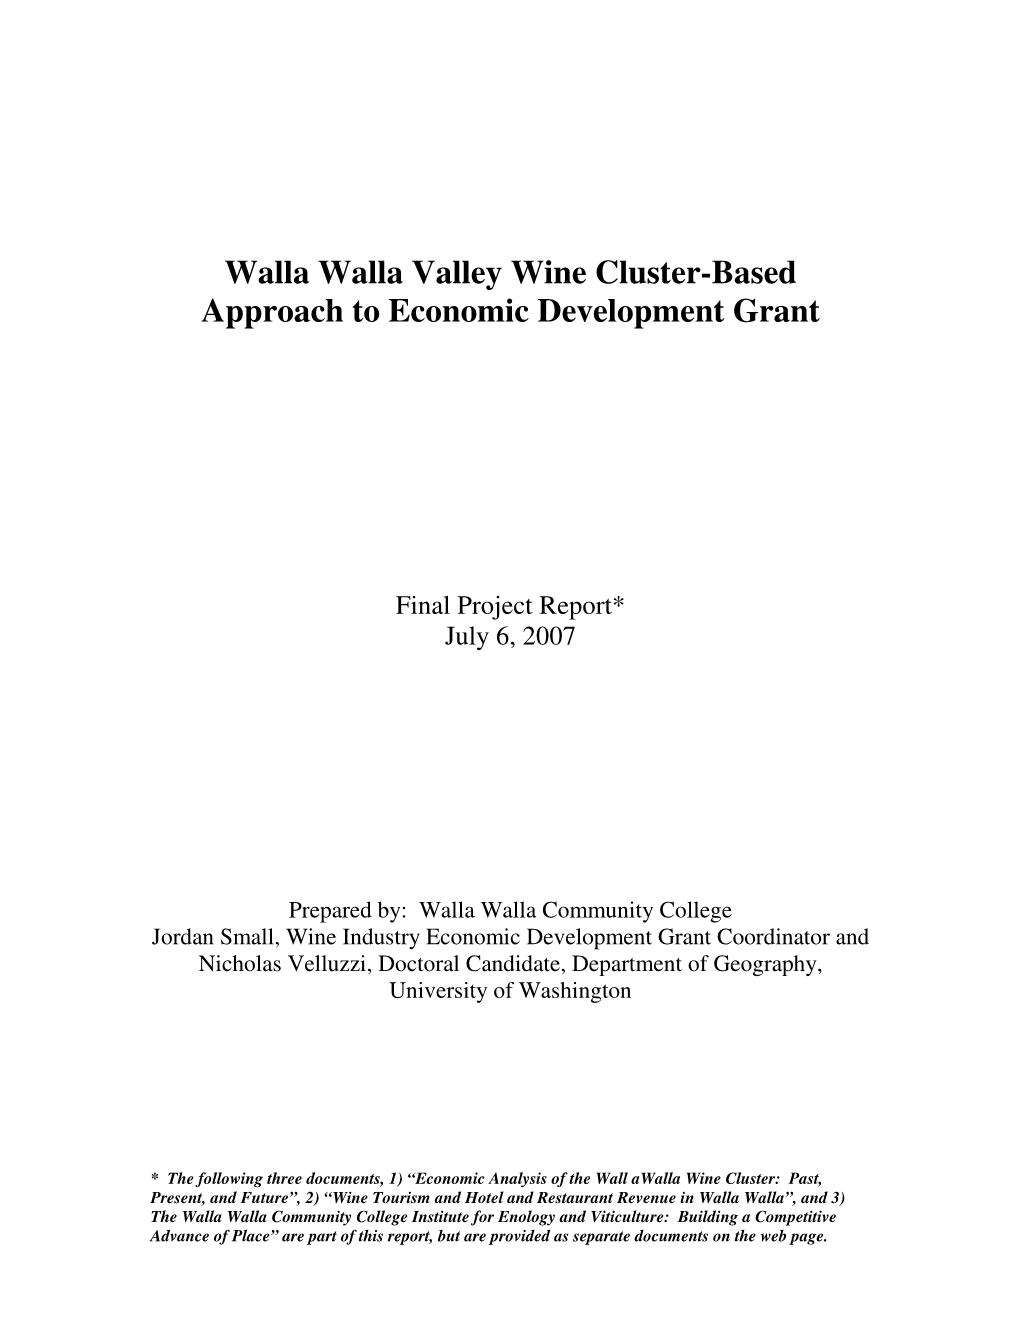 Walla Walla Valley Wine Cluster-Based Approach to Economic Development Grant